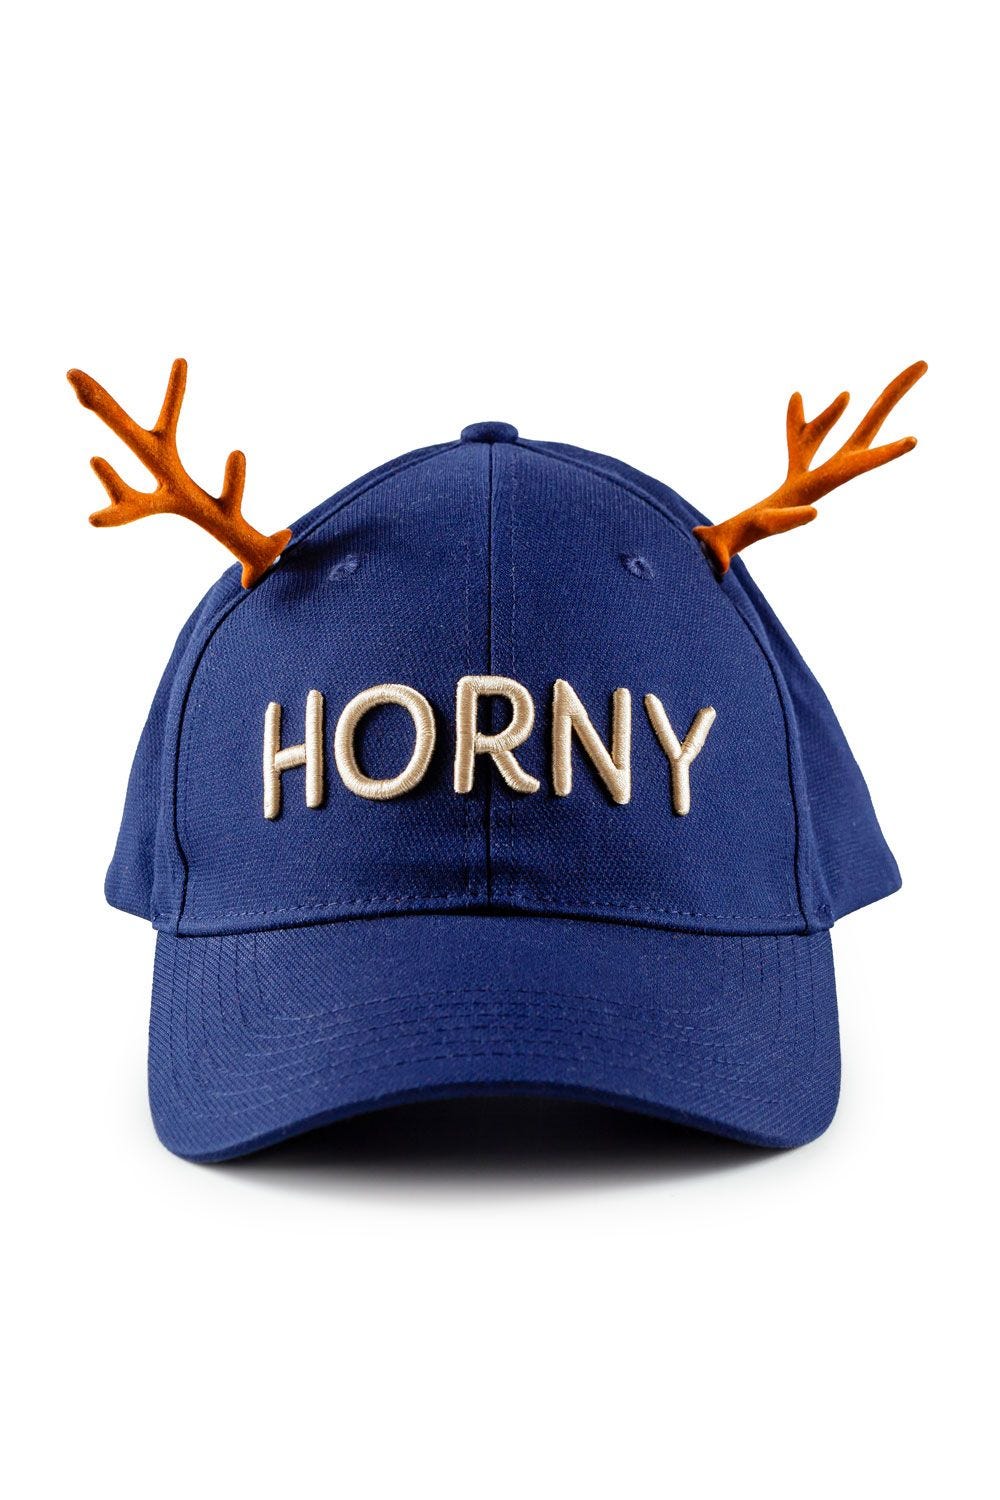 Image result for trucker hat horny